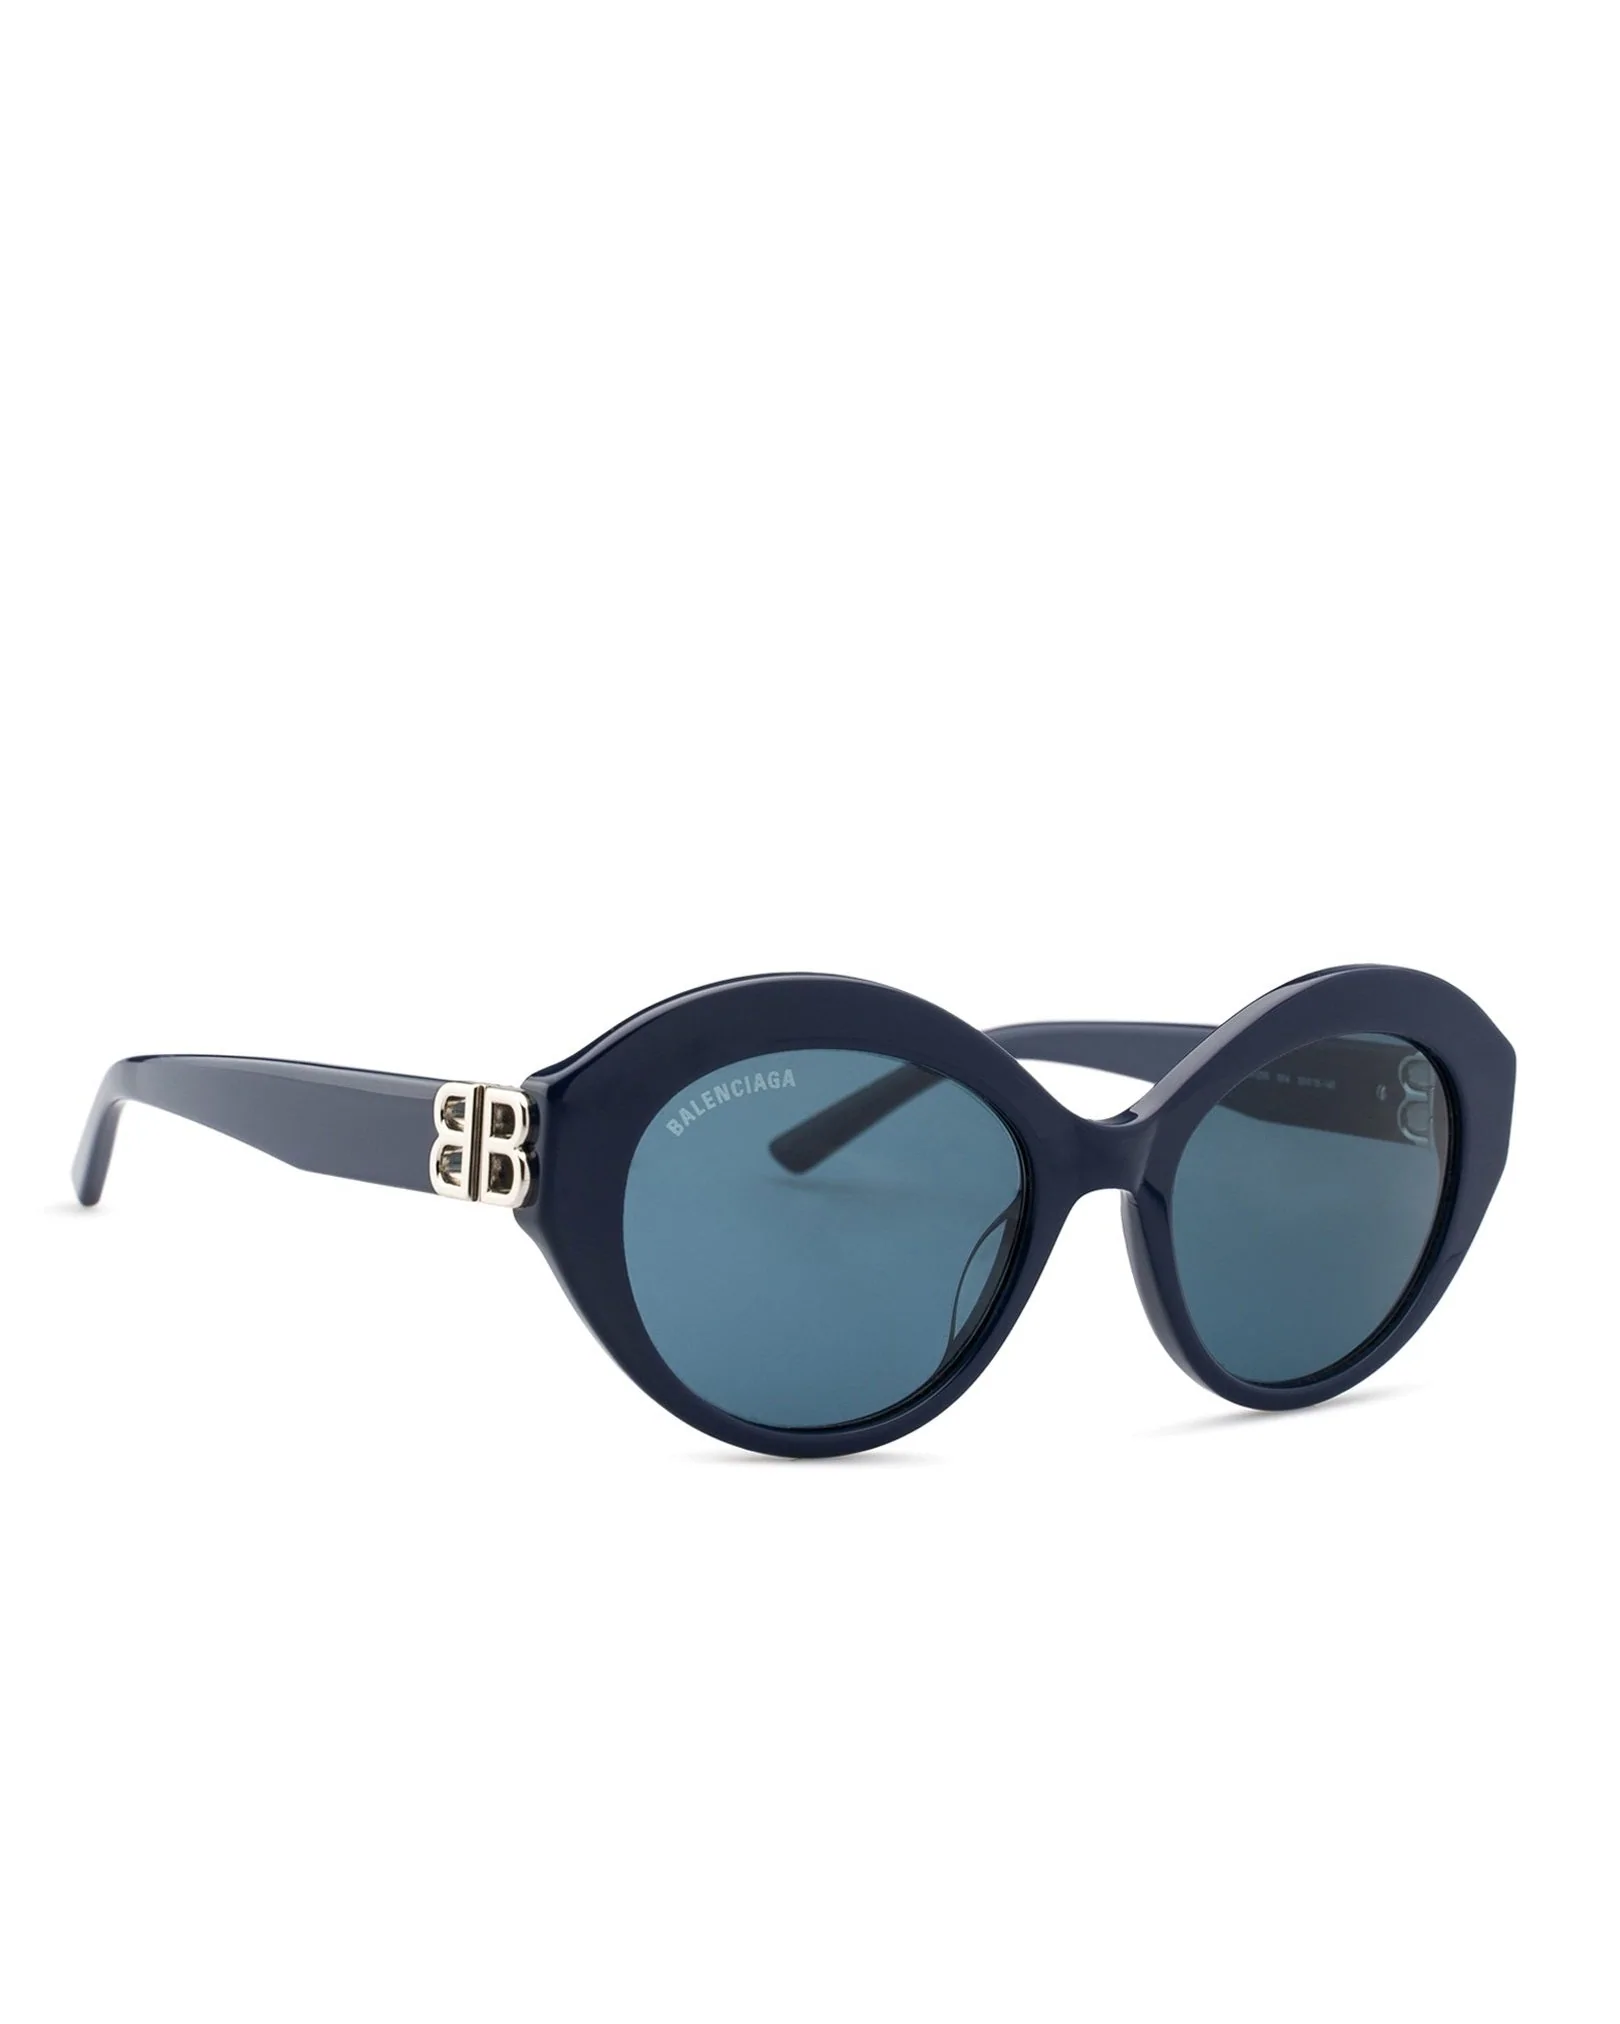 Balenciaga BB0133 S-004 Blue/Silver Sunglasses